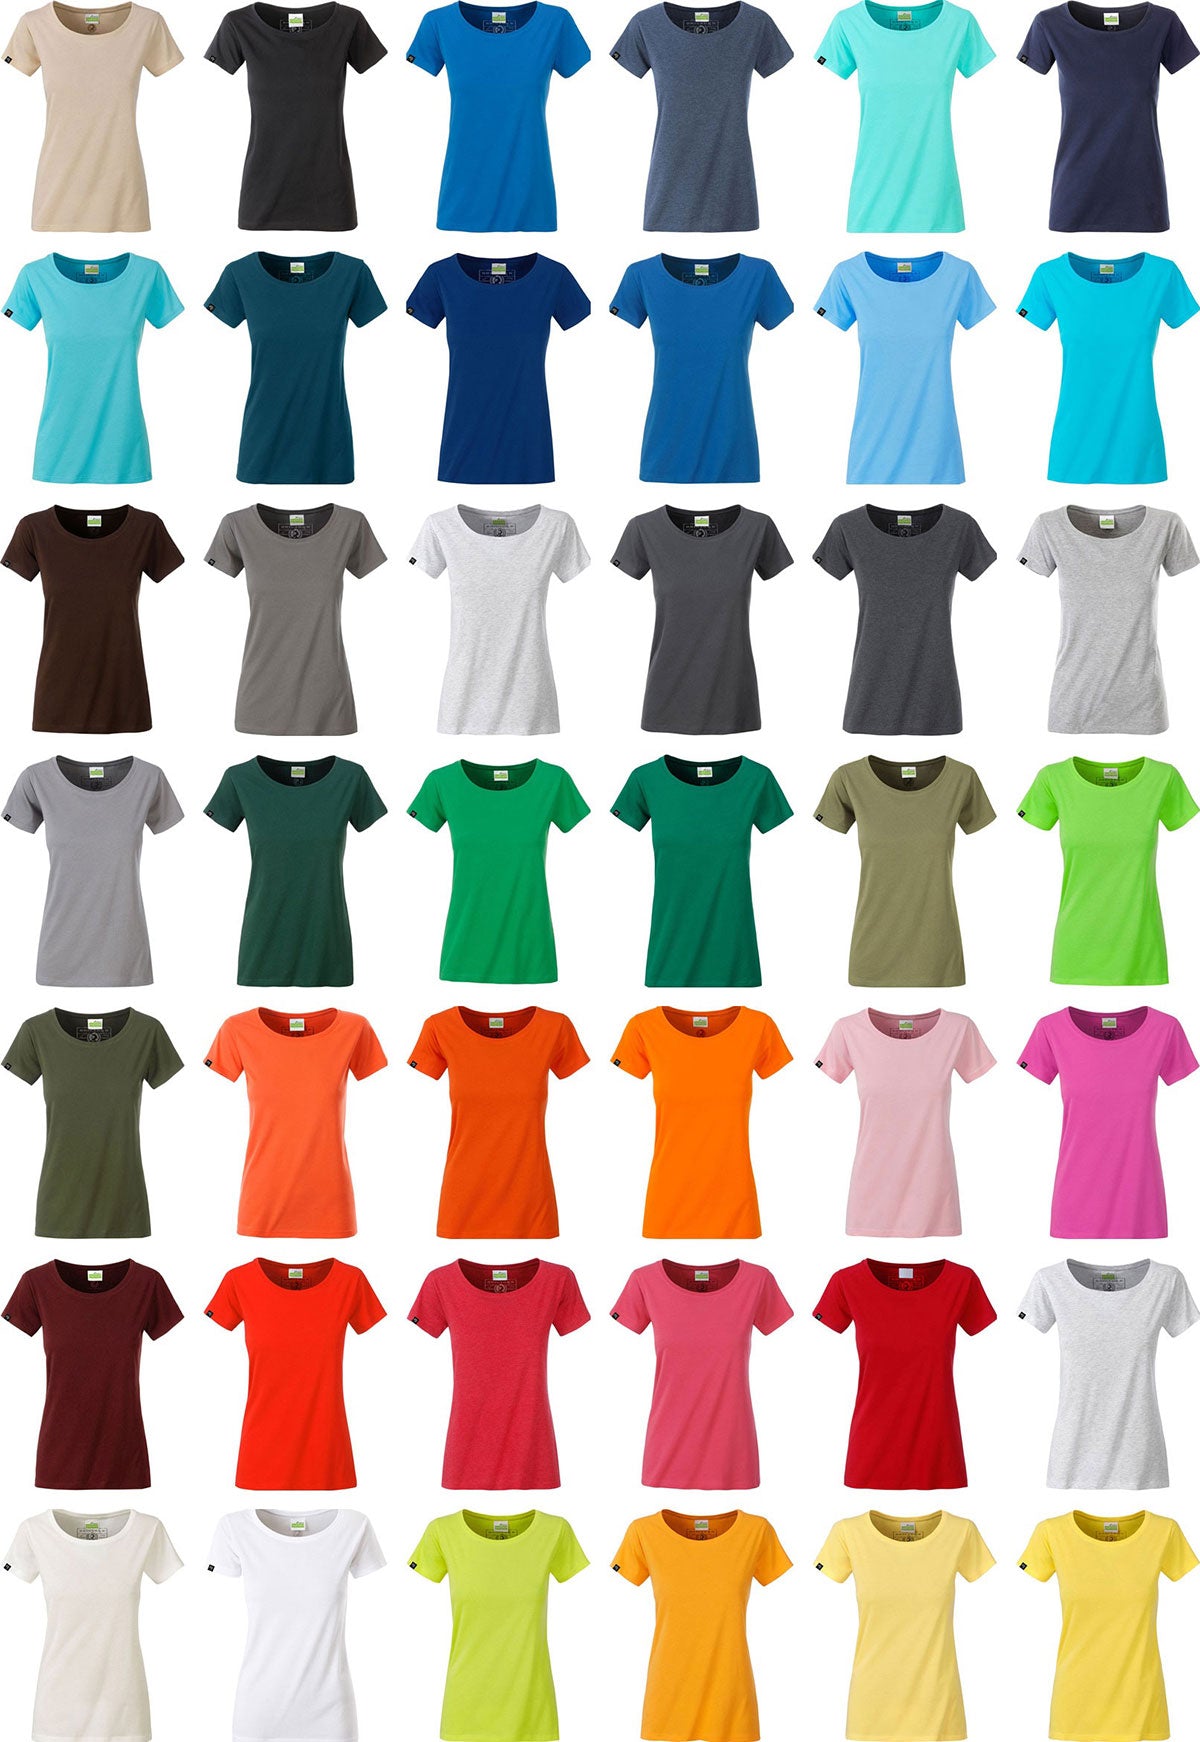 ― % ― JAN 8007 ― Damen Bio-Baumwolle T-Shirt Organic - Schwarz [XS]